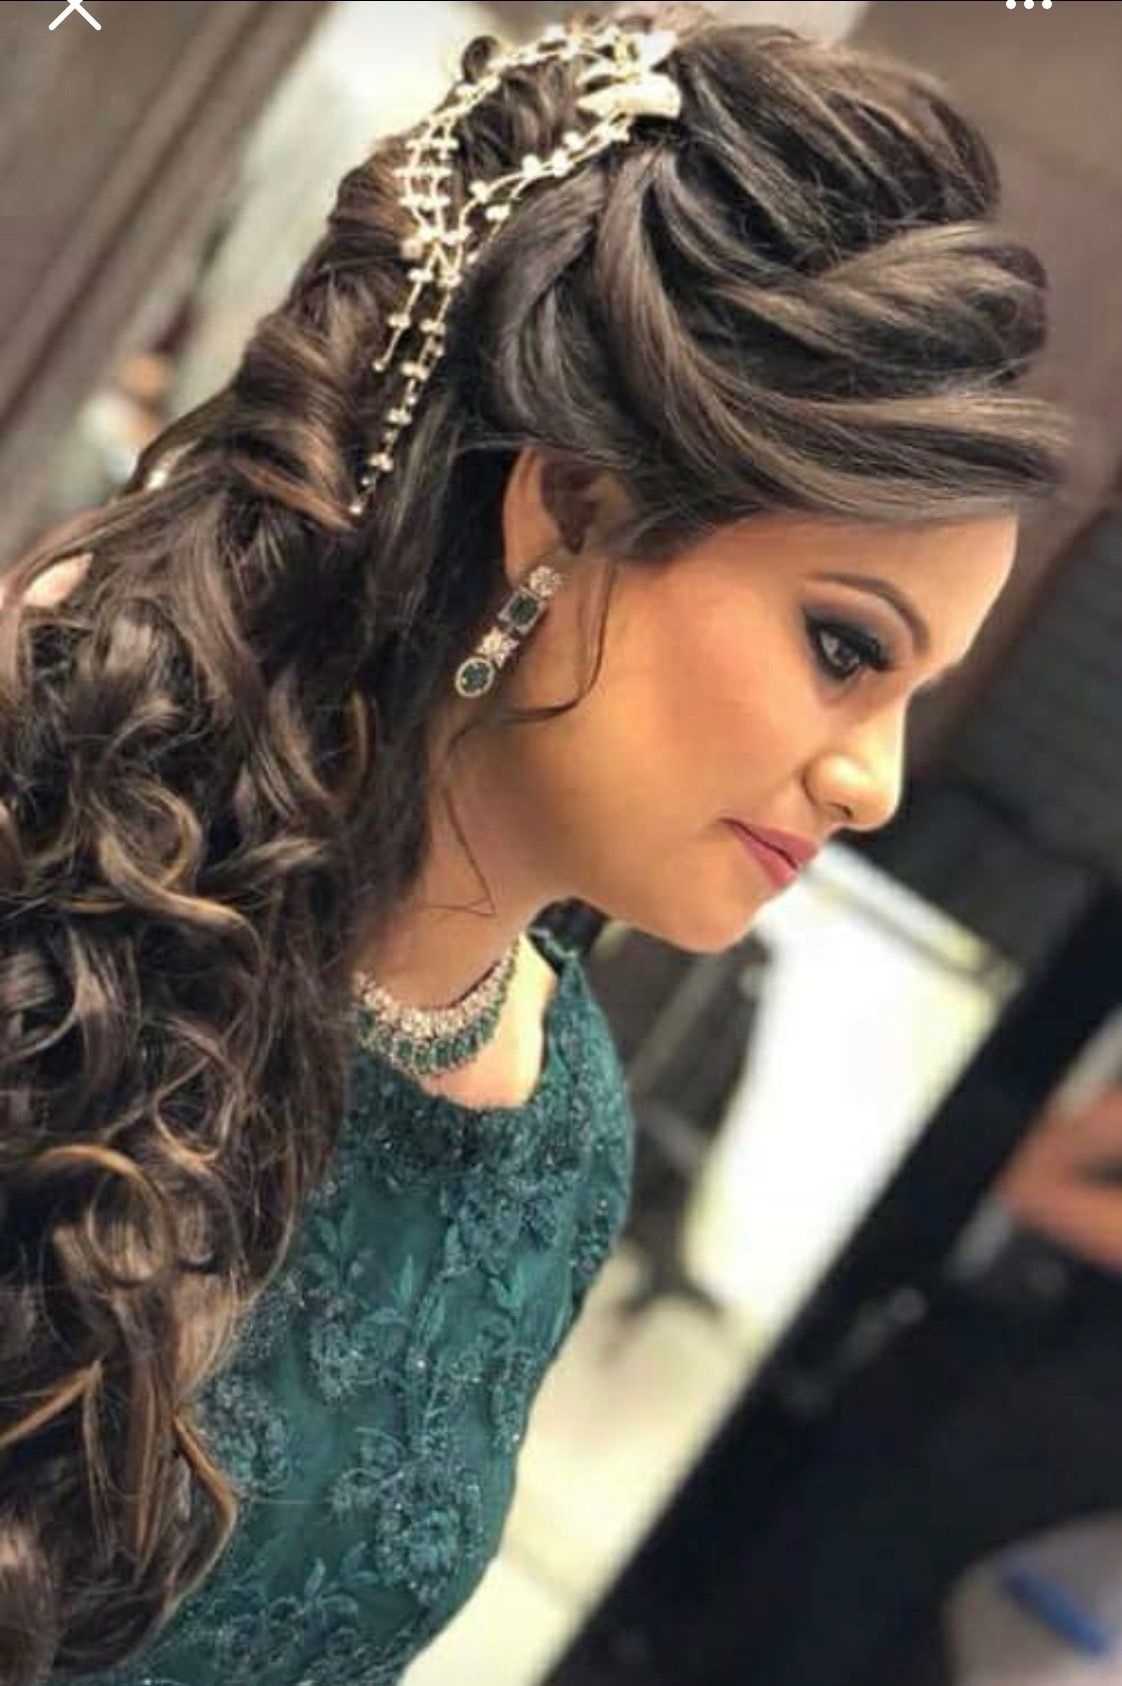 Hair Stile | Hair Styles In 2019 | Hair Styles, Pinterest inside Indian Wedding Hairstyles For Long Hair 2018